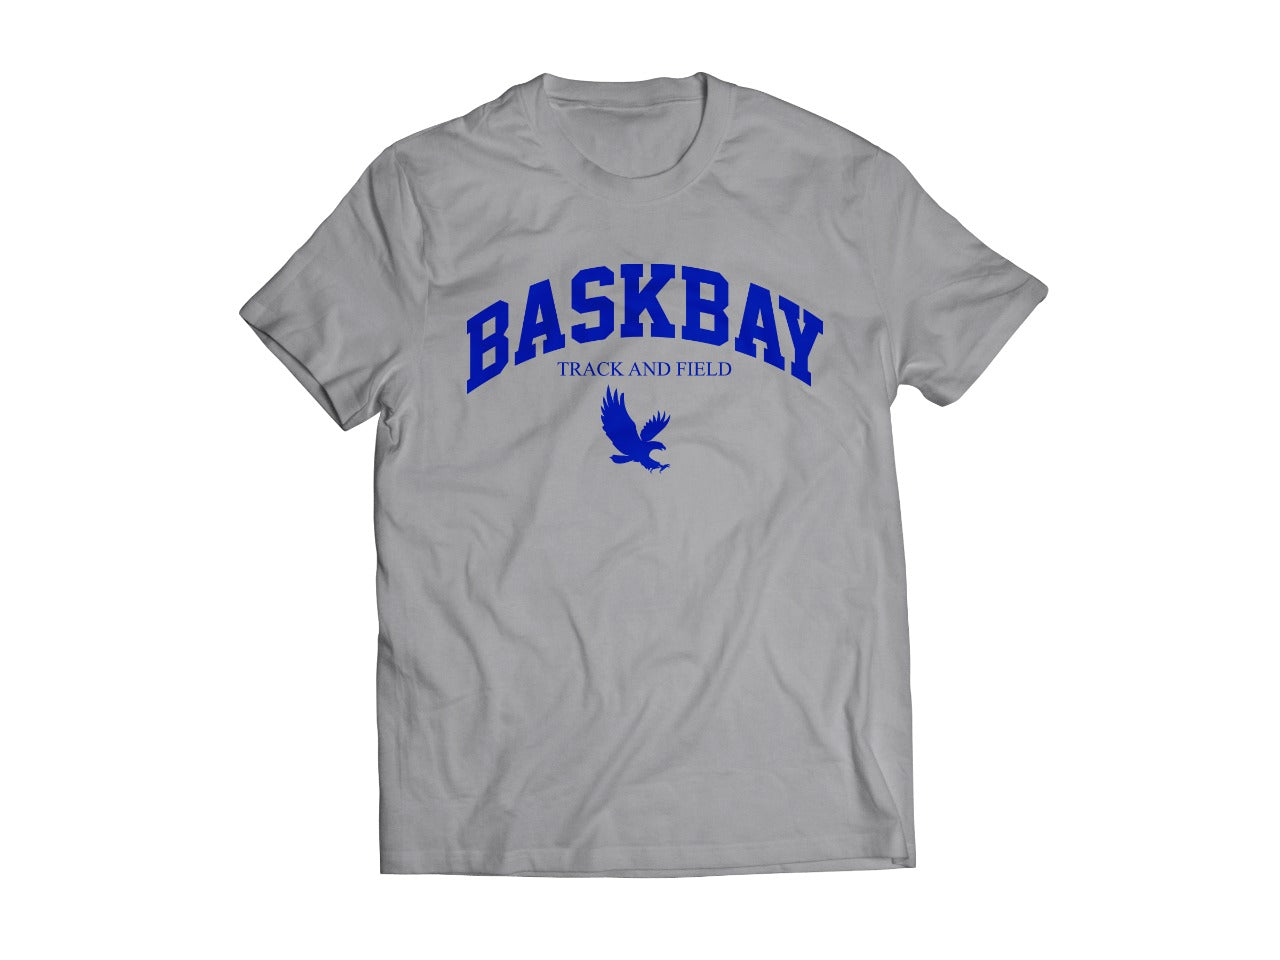 Baskbay Track and Field T-Shirt - Blue on Grey